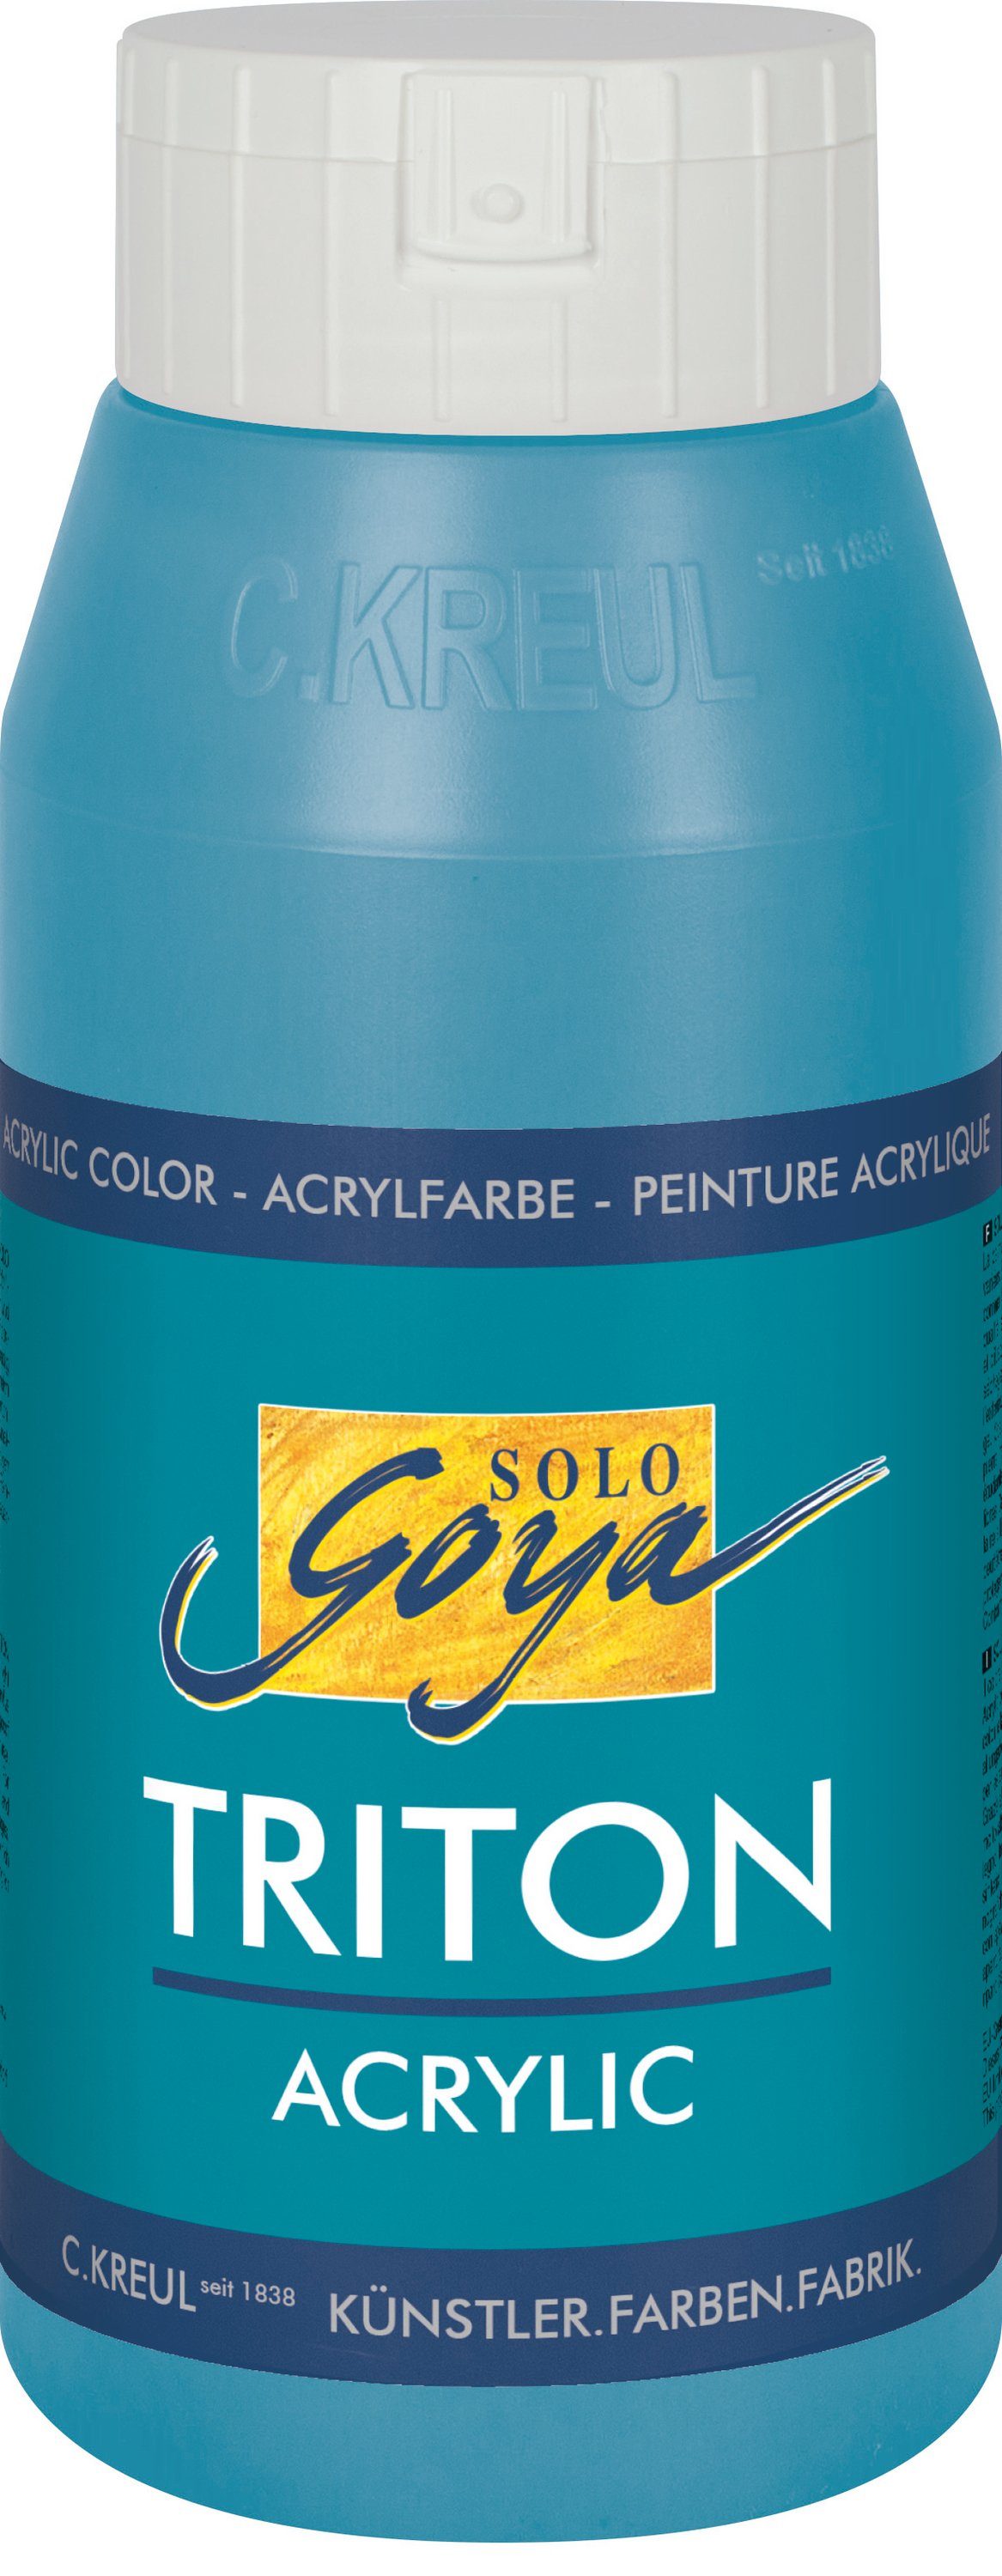 Kreul Acrylfarbe Solo Goya Triton Türkisblau Acrylic, 750 ml